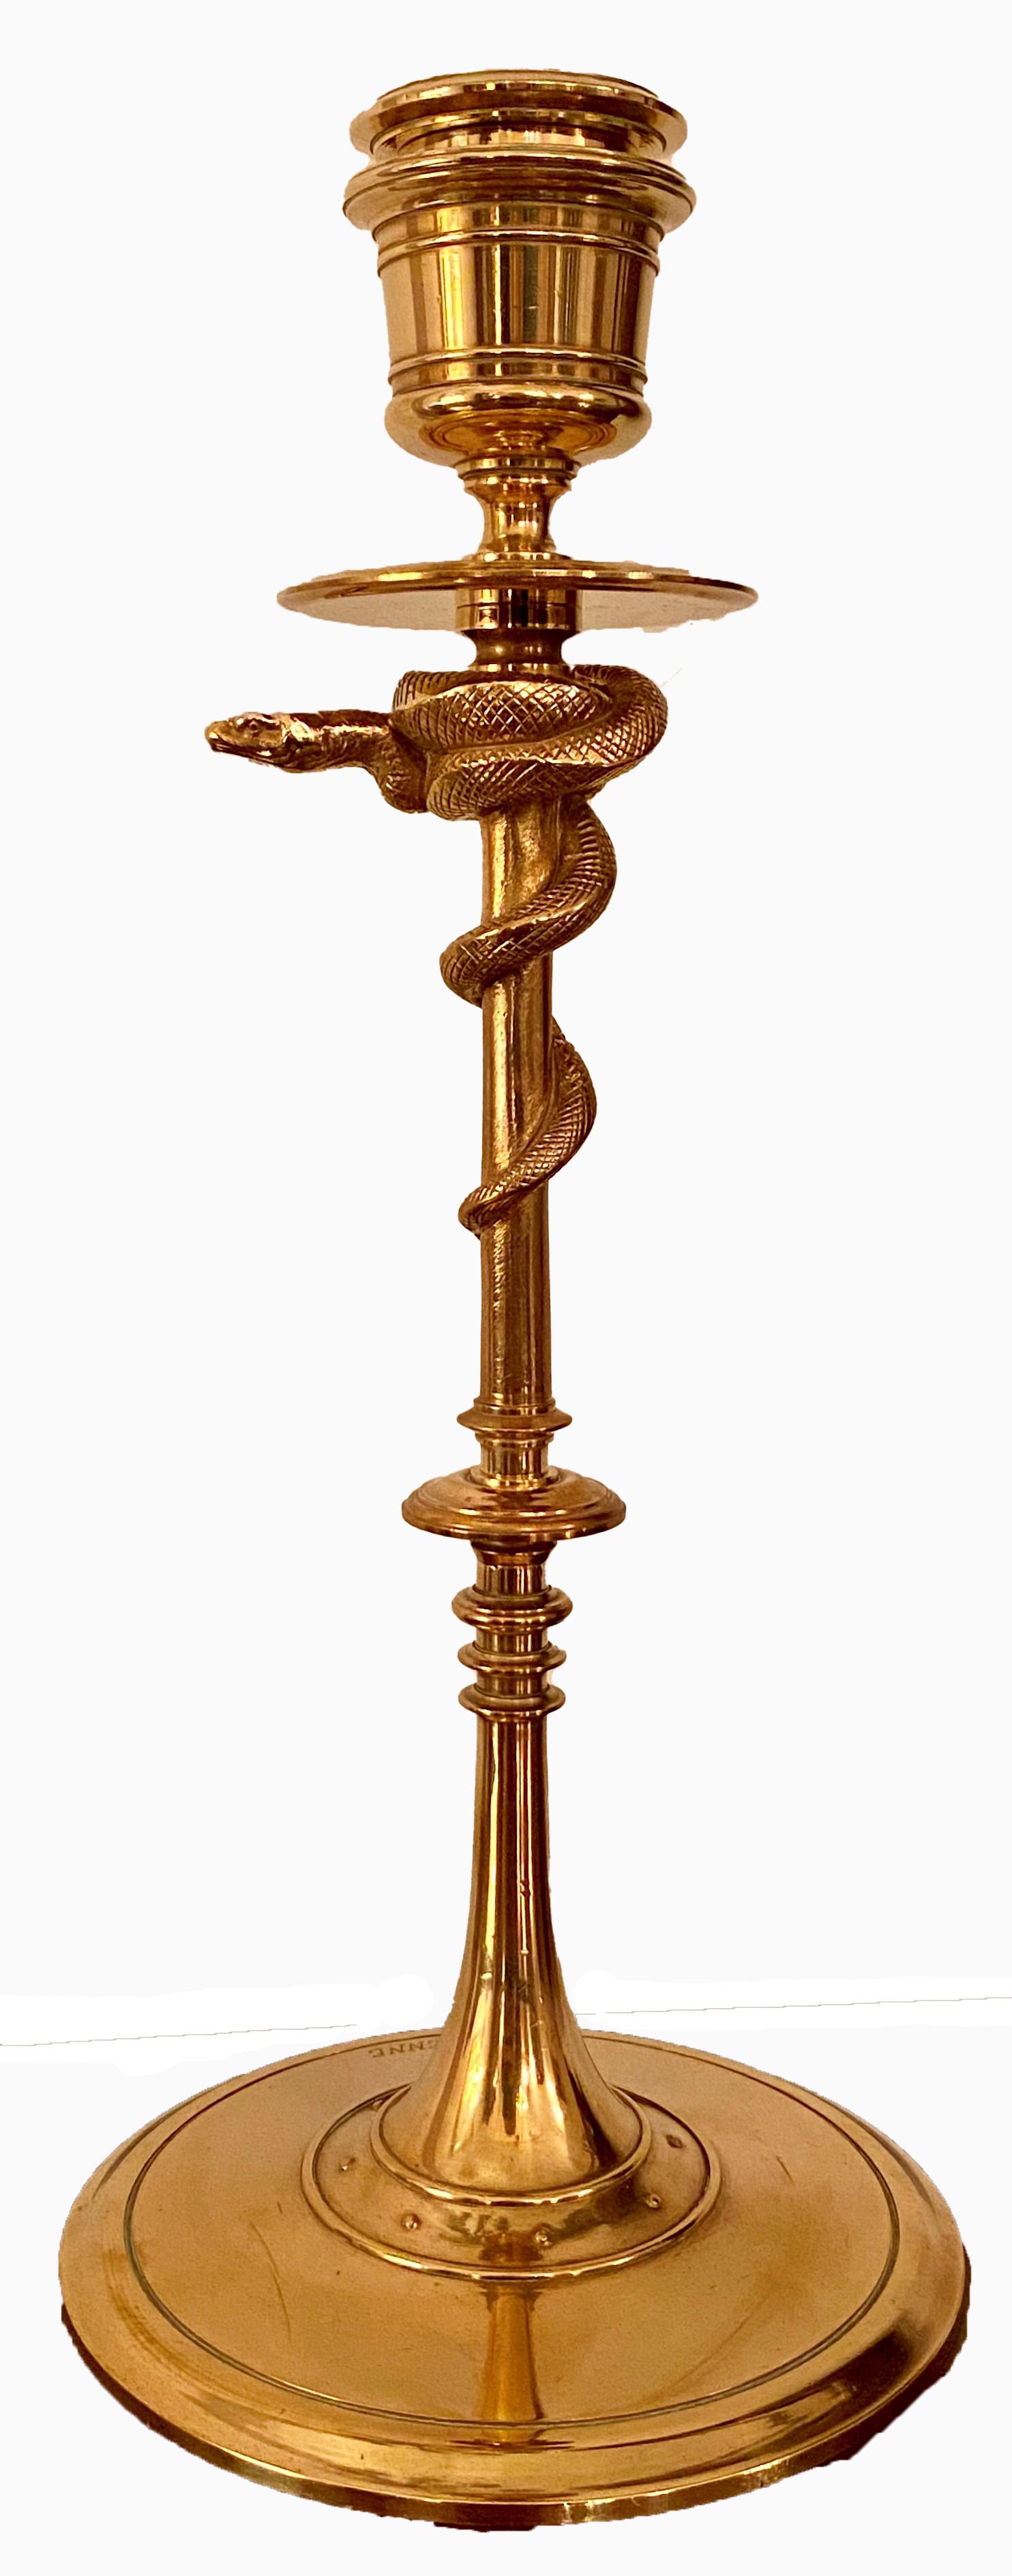 Pair of antique superb gold bronze snake candlesticks signed by Maker, Ferdinand Barbedienne (1810-1891).
Measures: 4-1/2